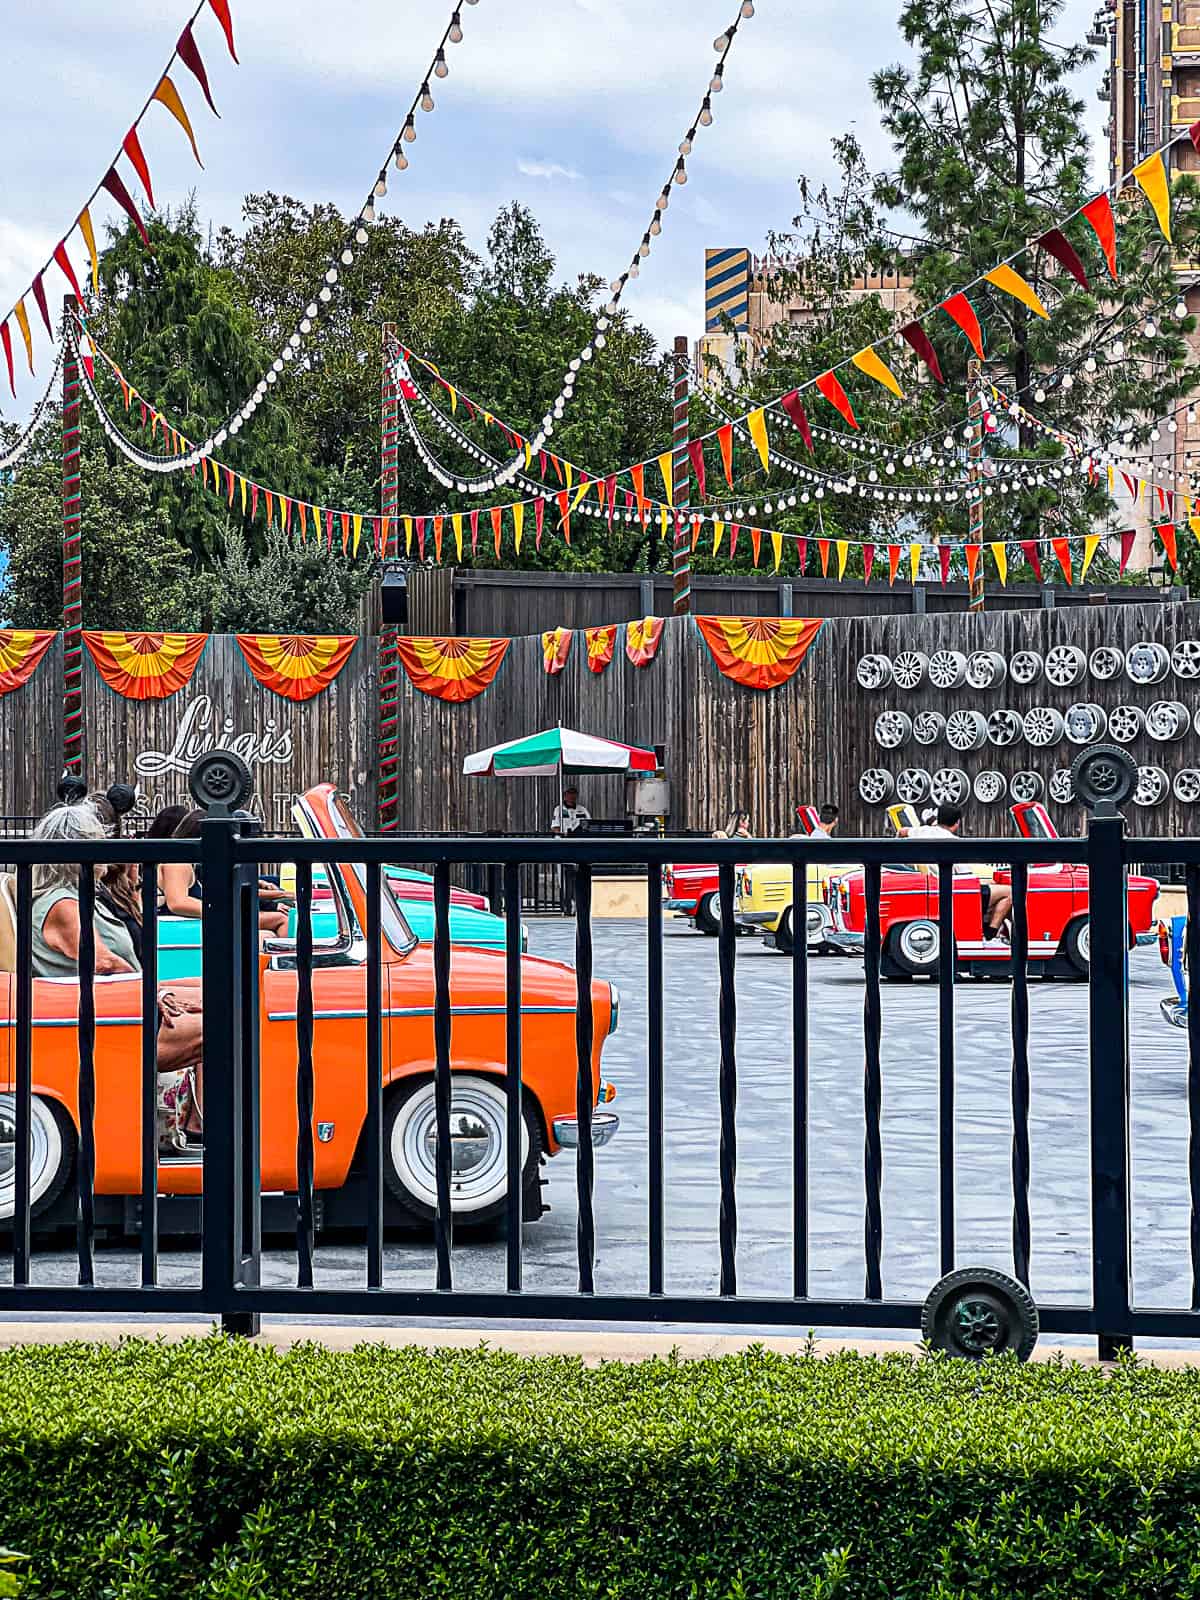 Luigis Ride Decorated for Halloween at Disneyland